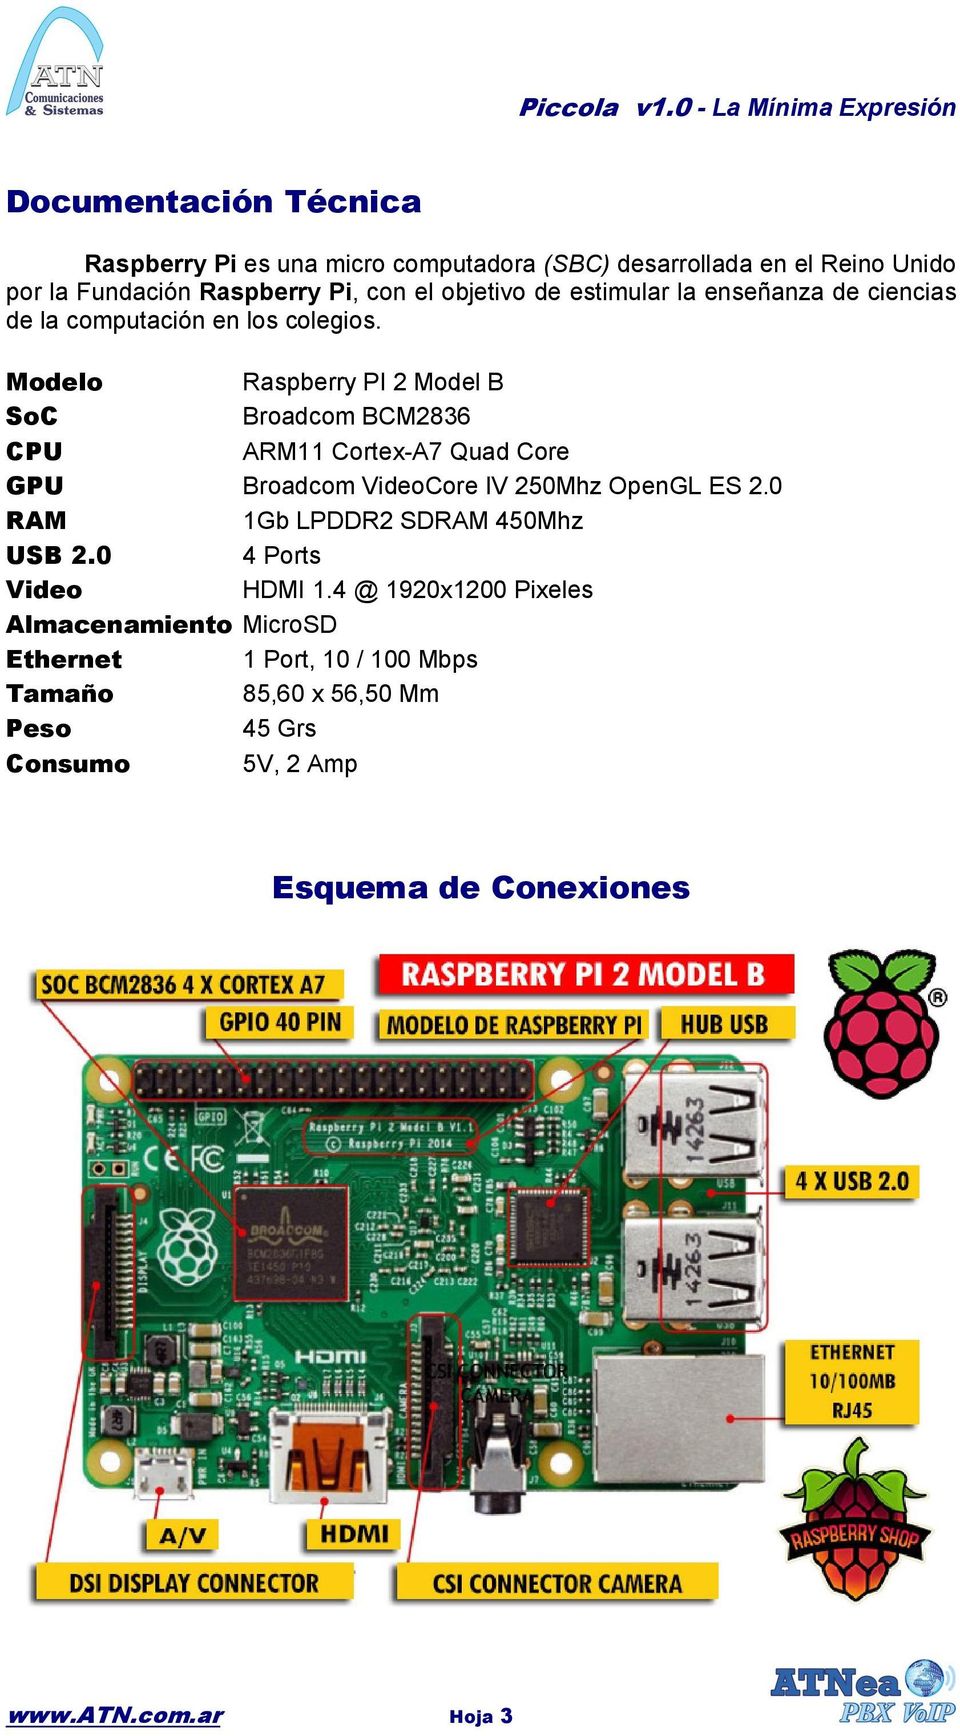 Modelo Raspberry PI 2 Model B SoC Broadcom BCM2836 CPU ARM11 Cortex-A7 Quad Core GPU Broadcom VideoCore IV 250Mhz OpenGL ES 2.